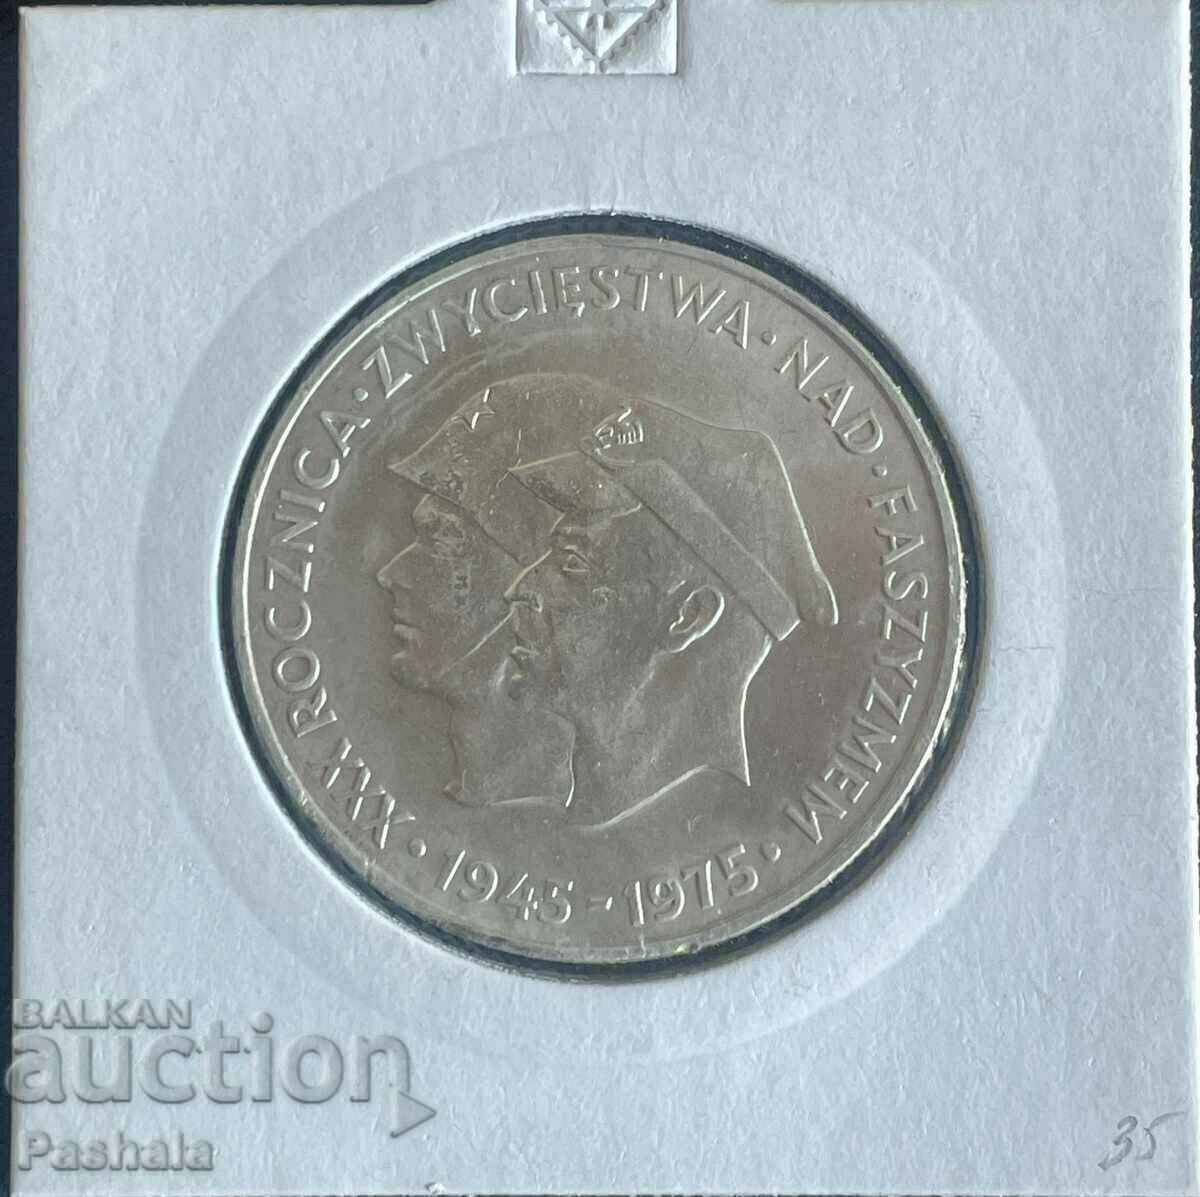 Poland 200 zlotys 1975